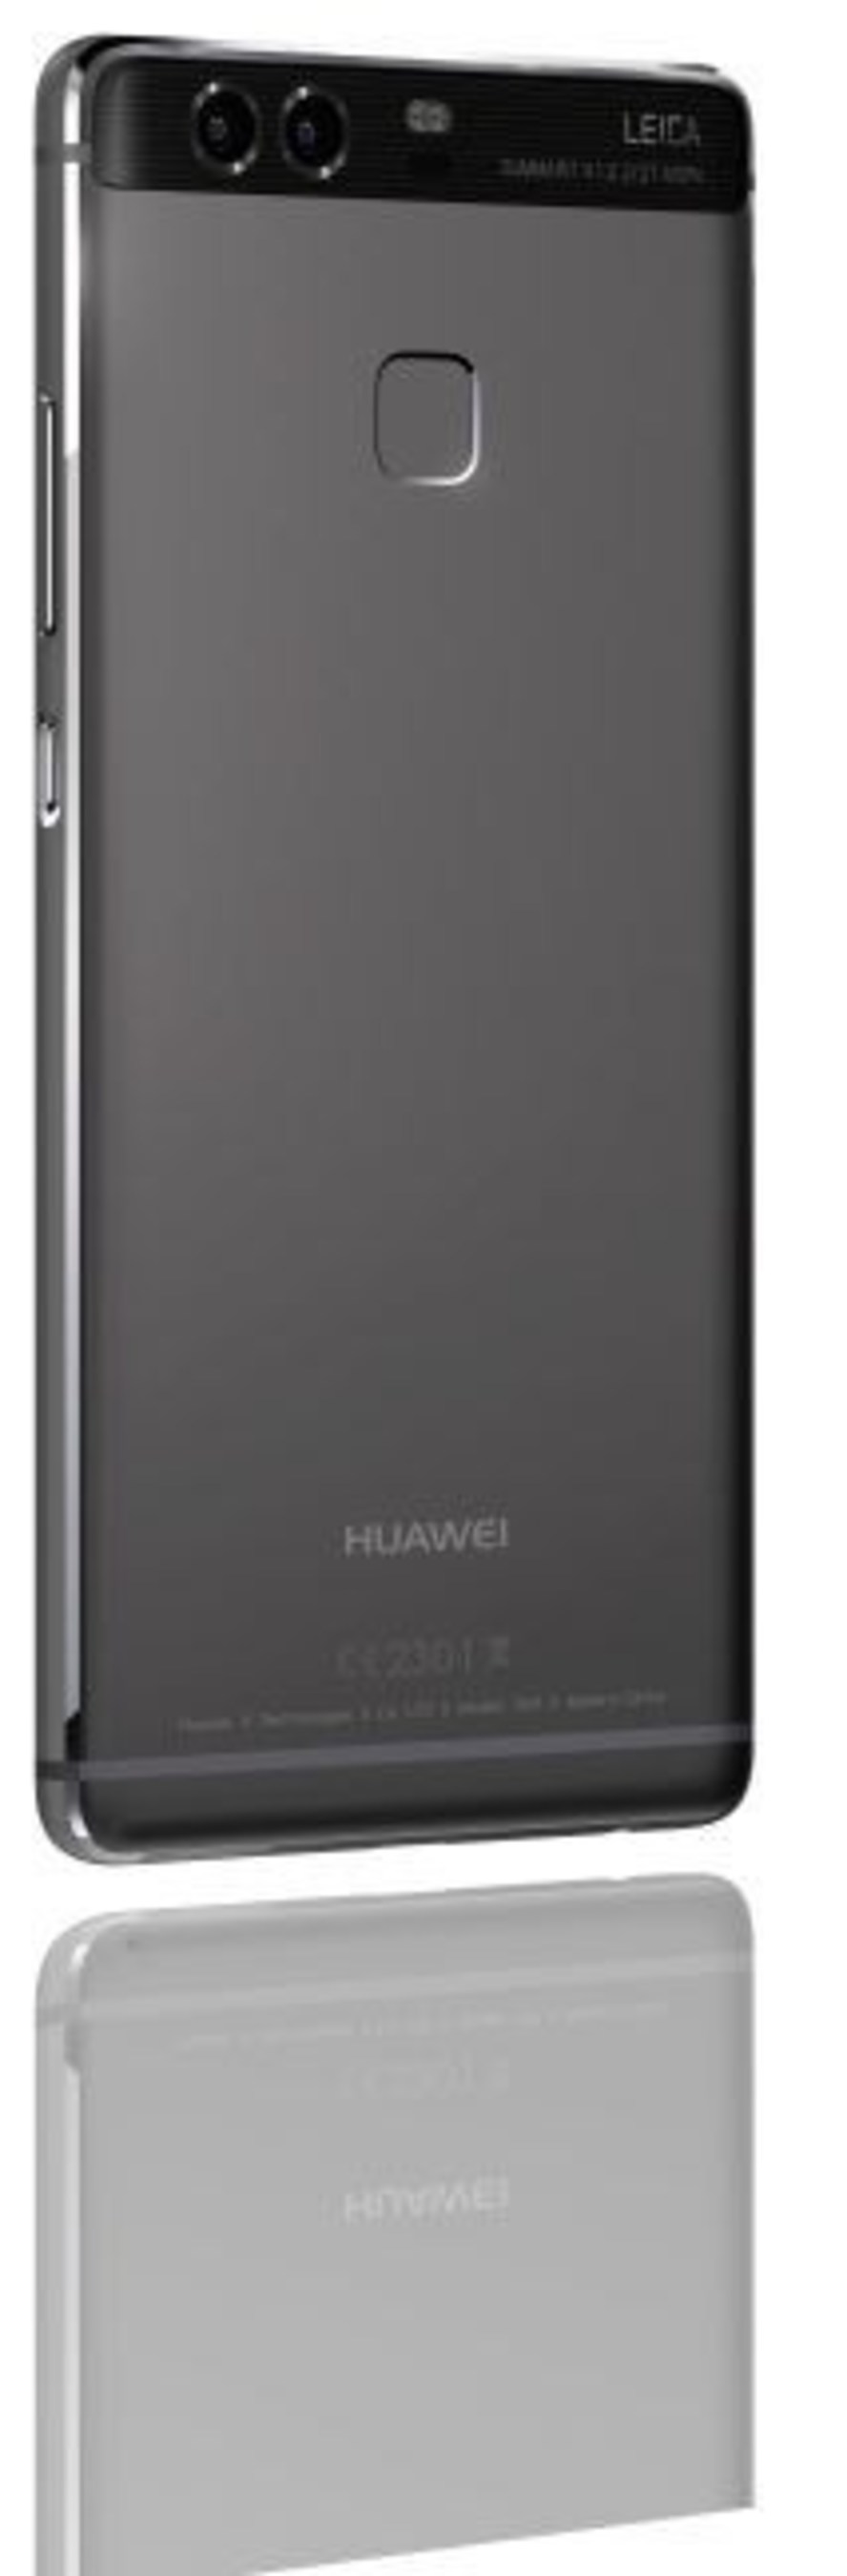 Huawei launch P9 smartphone with P2i nano coating